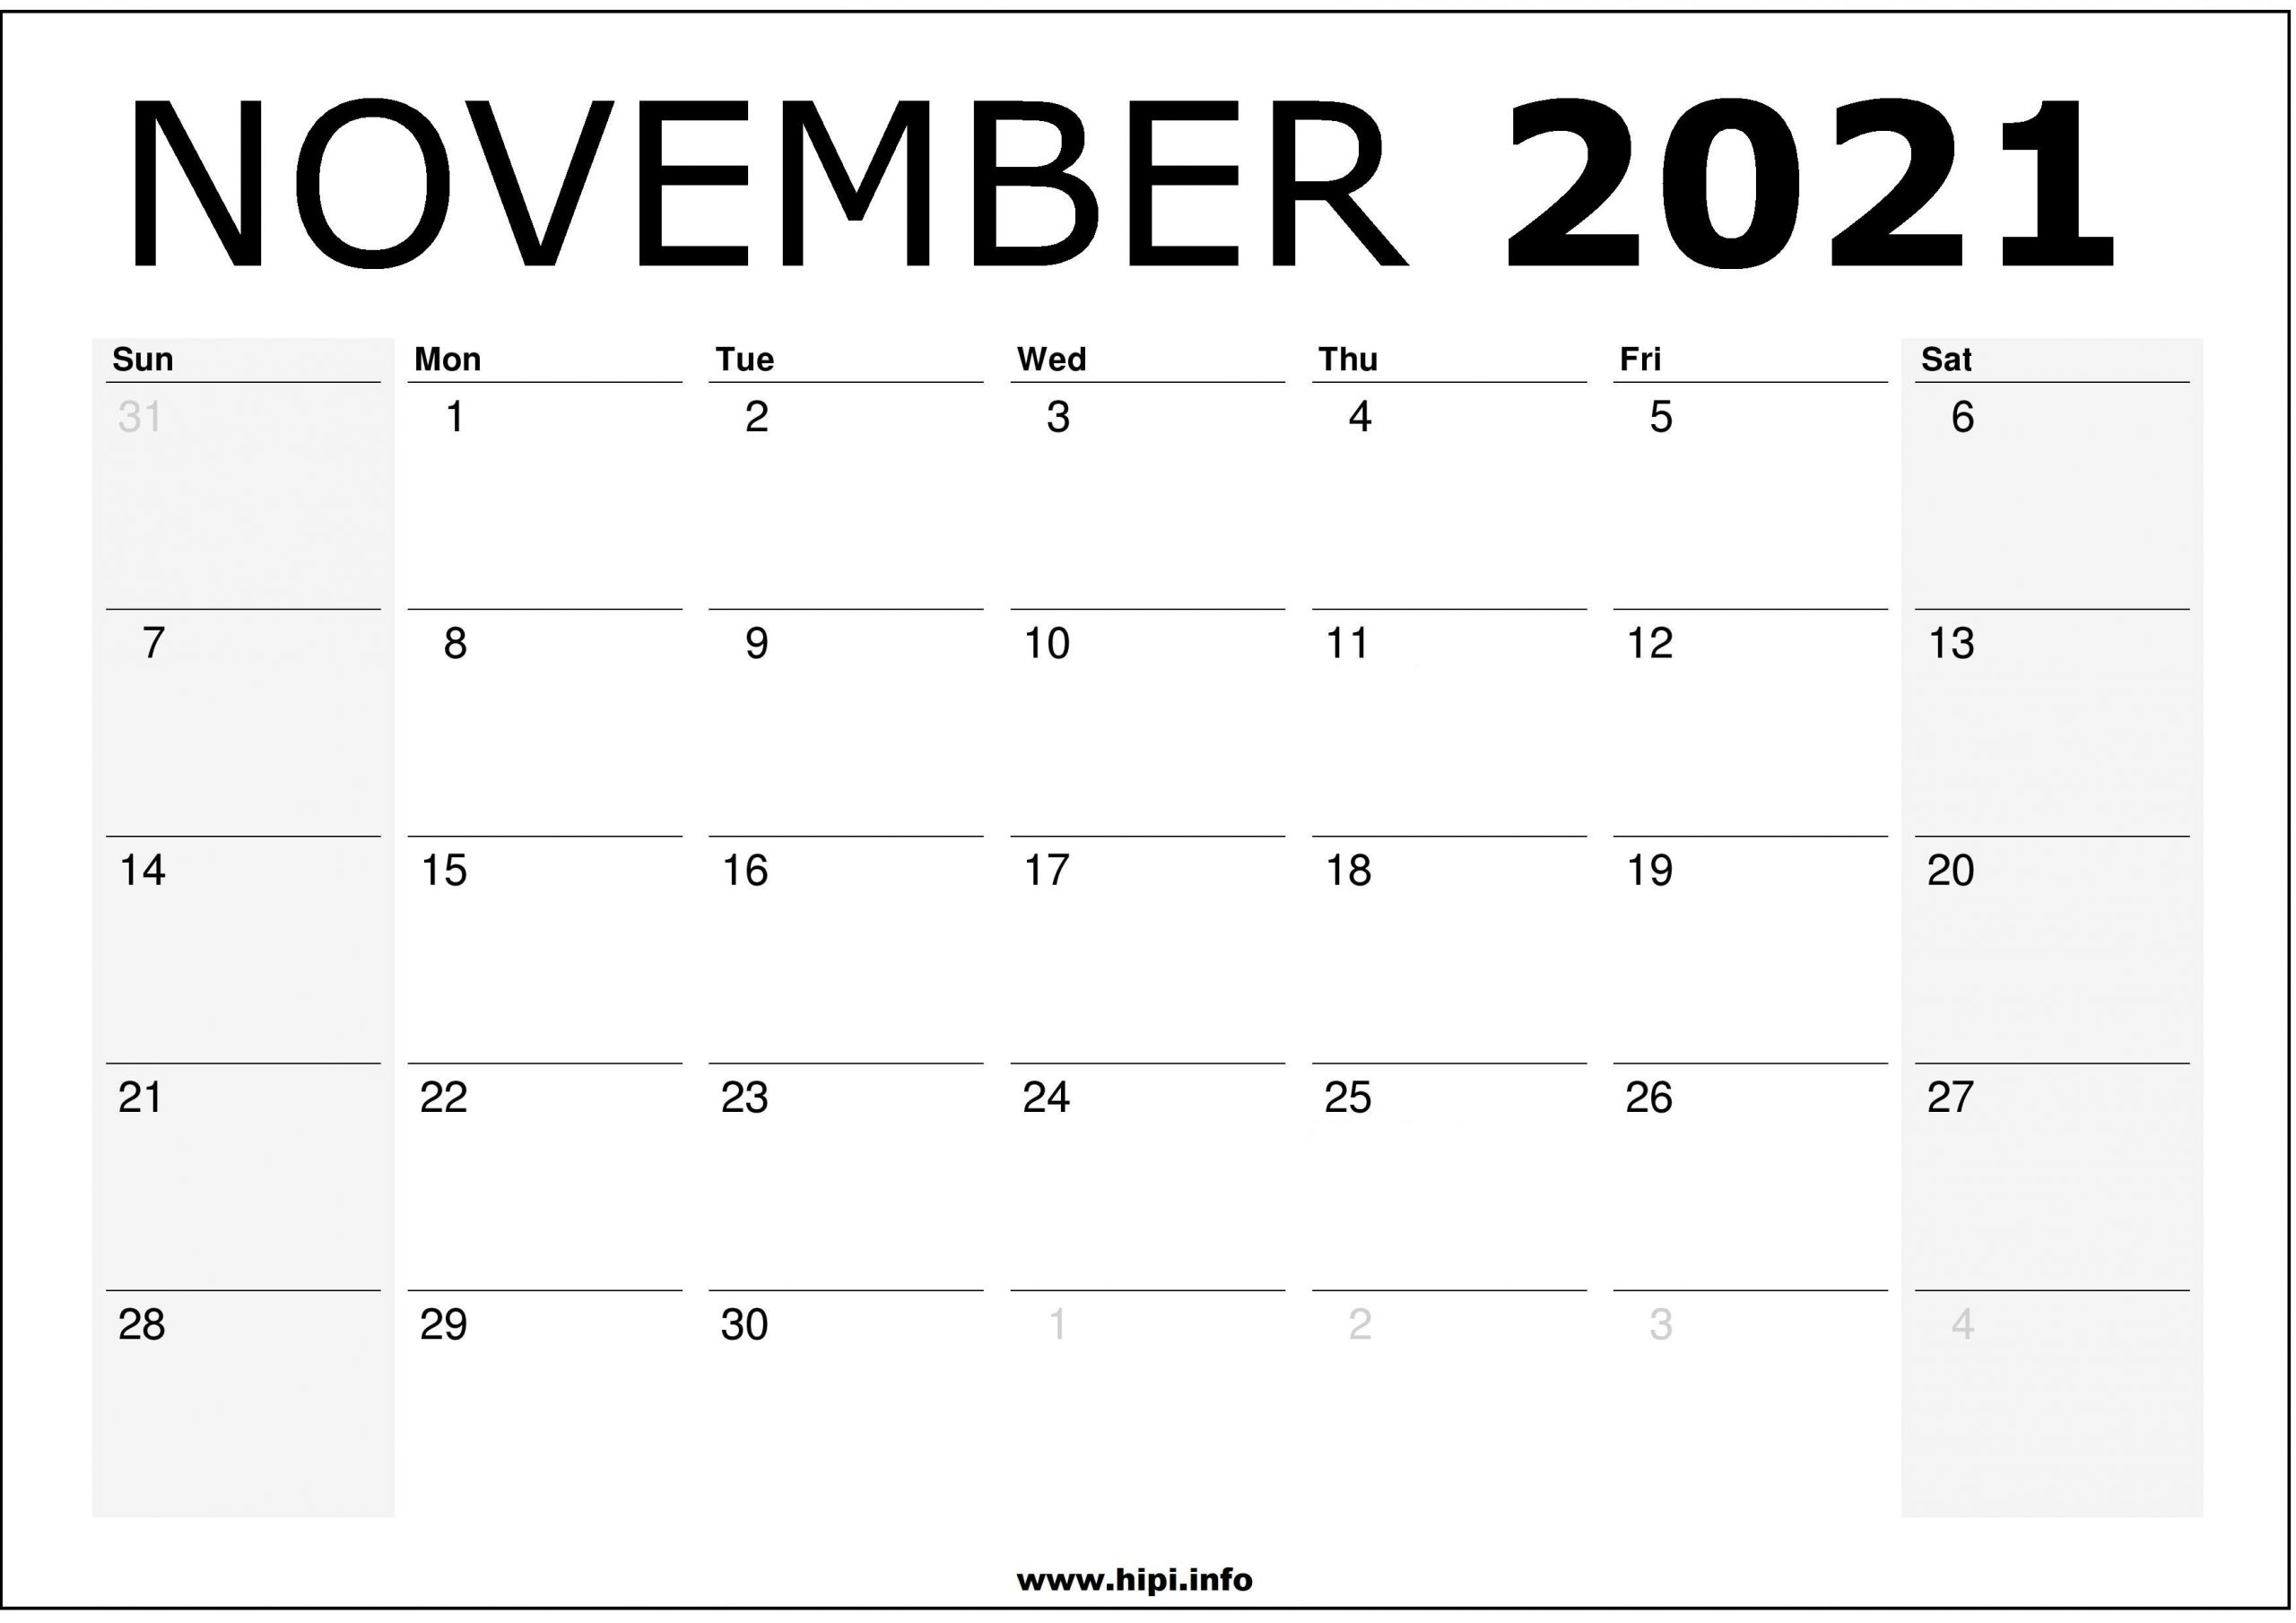 November 2021 Calendar Wallpapers - Wallpaper Cave Calendar Showing December 2020 And January 2021